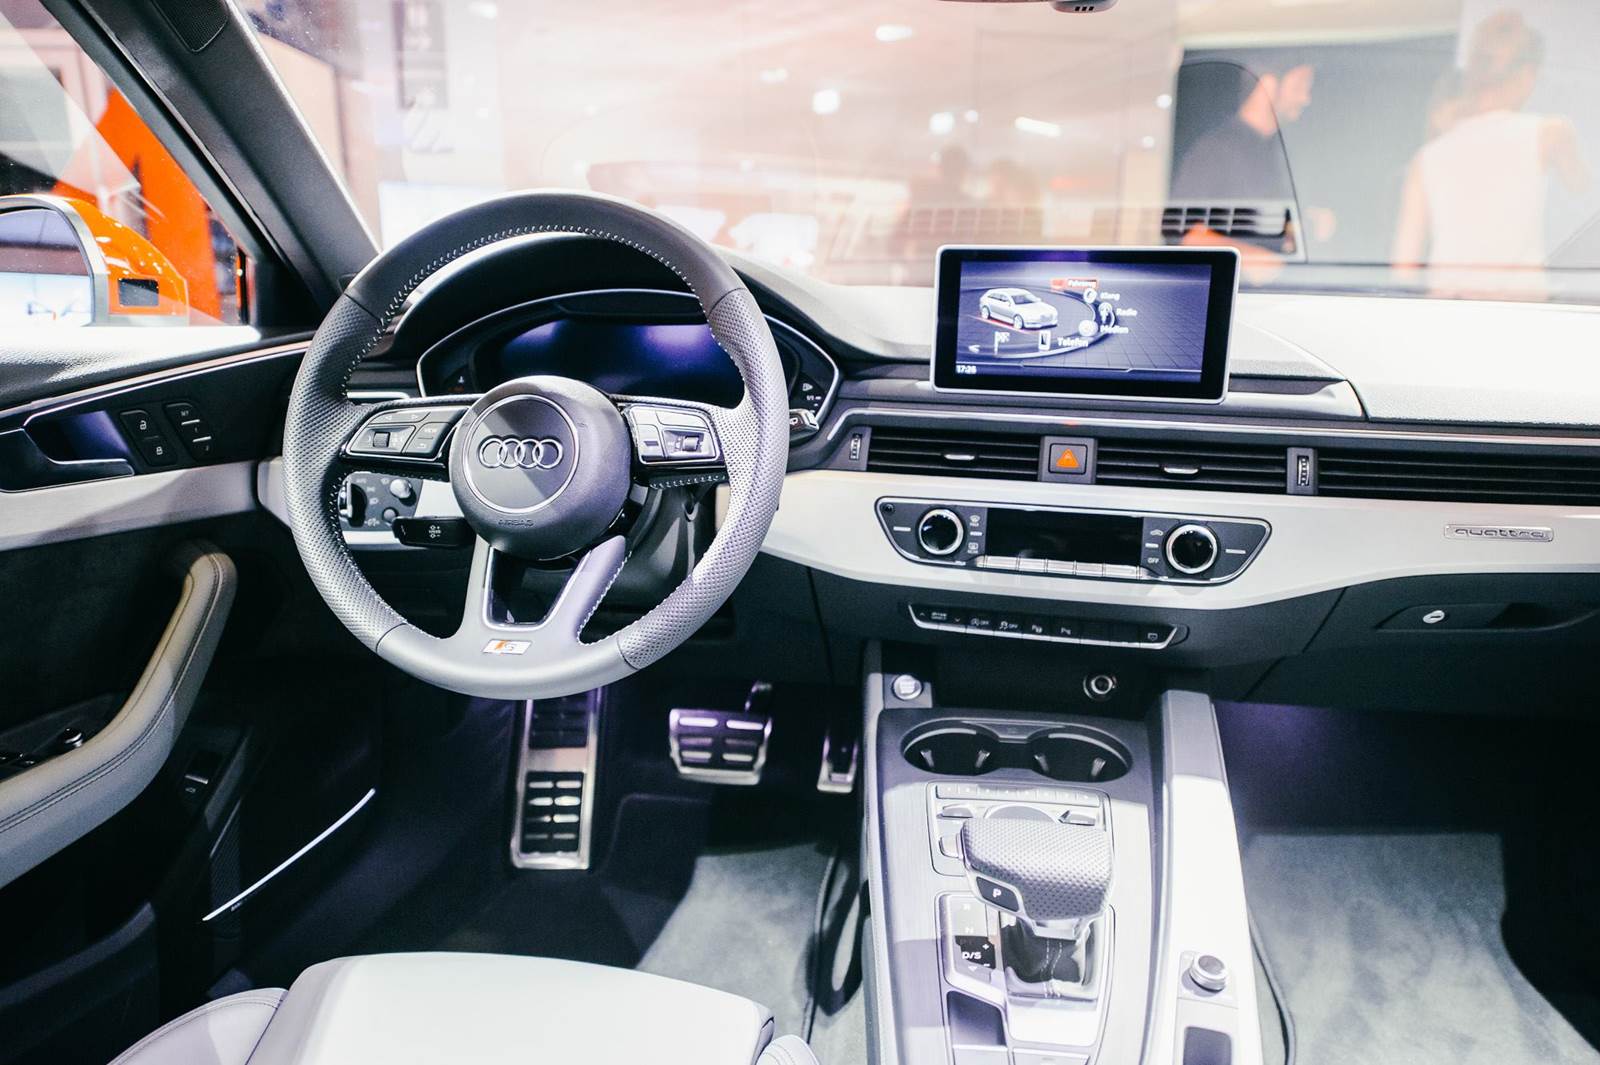 Next Generation Audi A4 Interior